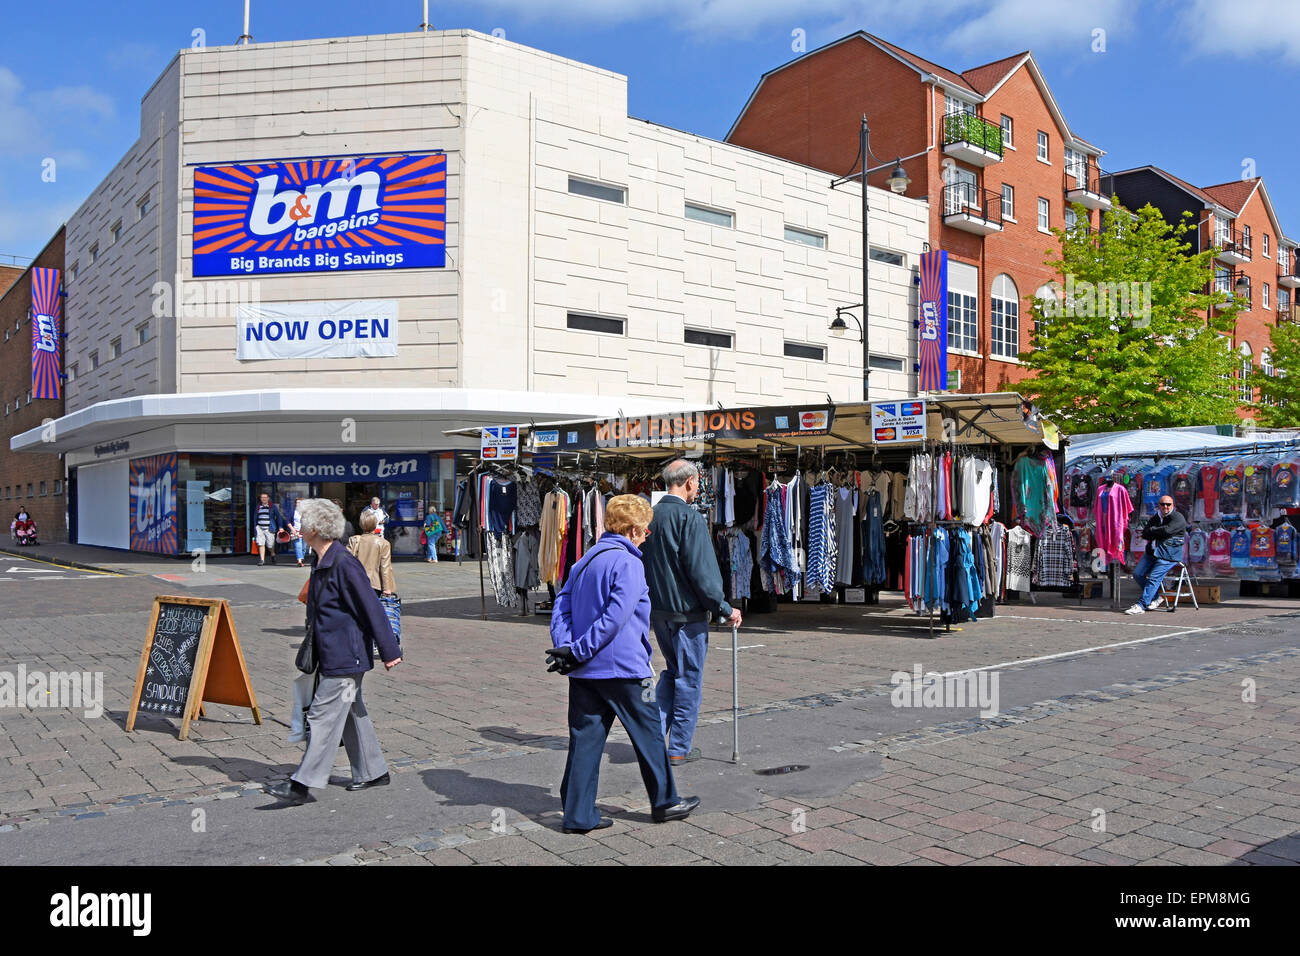 Romford market place stalls with a recently opened B&M Billington & Mayman bargain store market place London Borough of Havering England UK Stock Photo